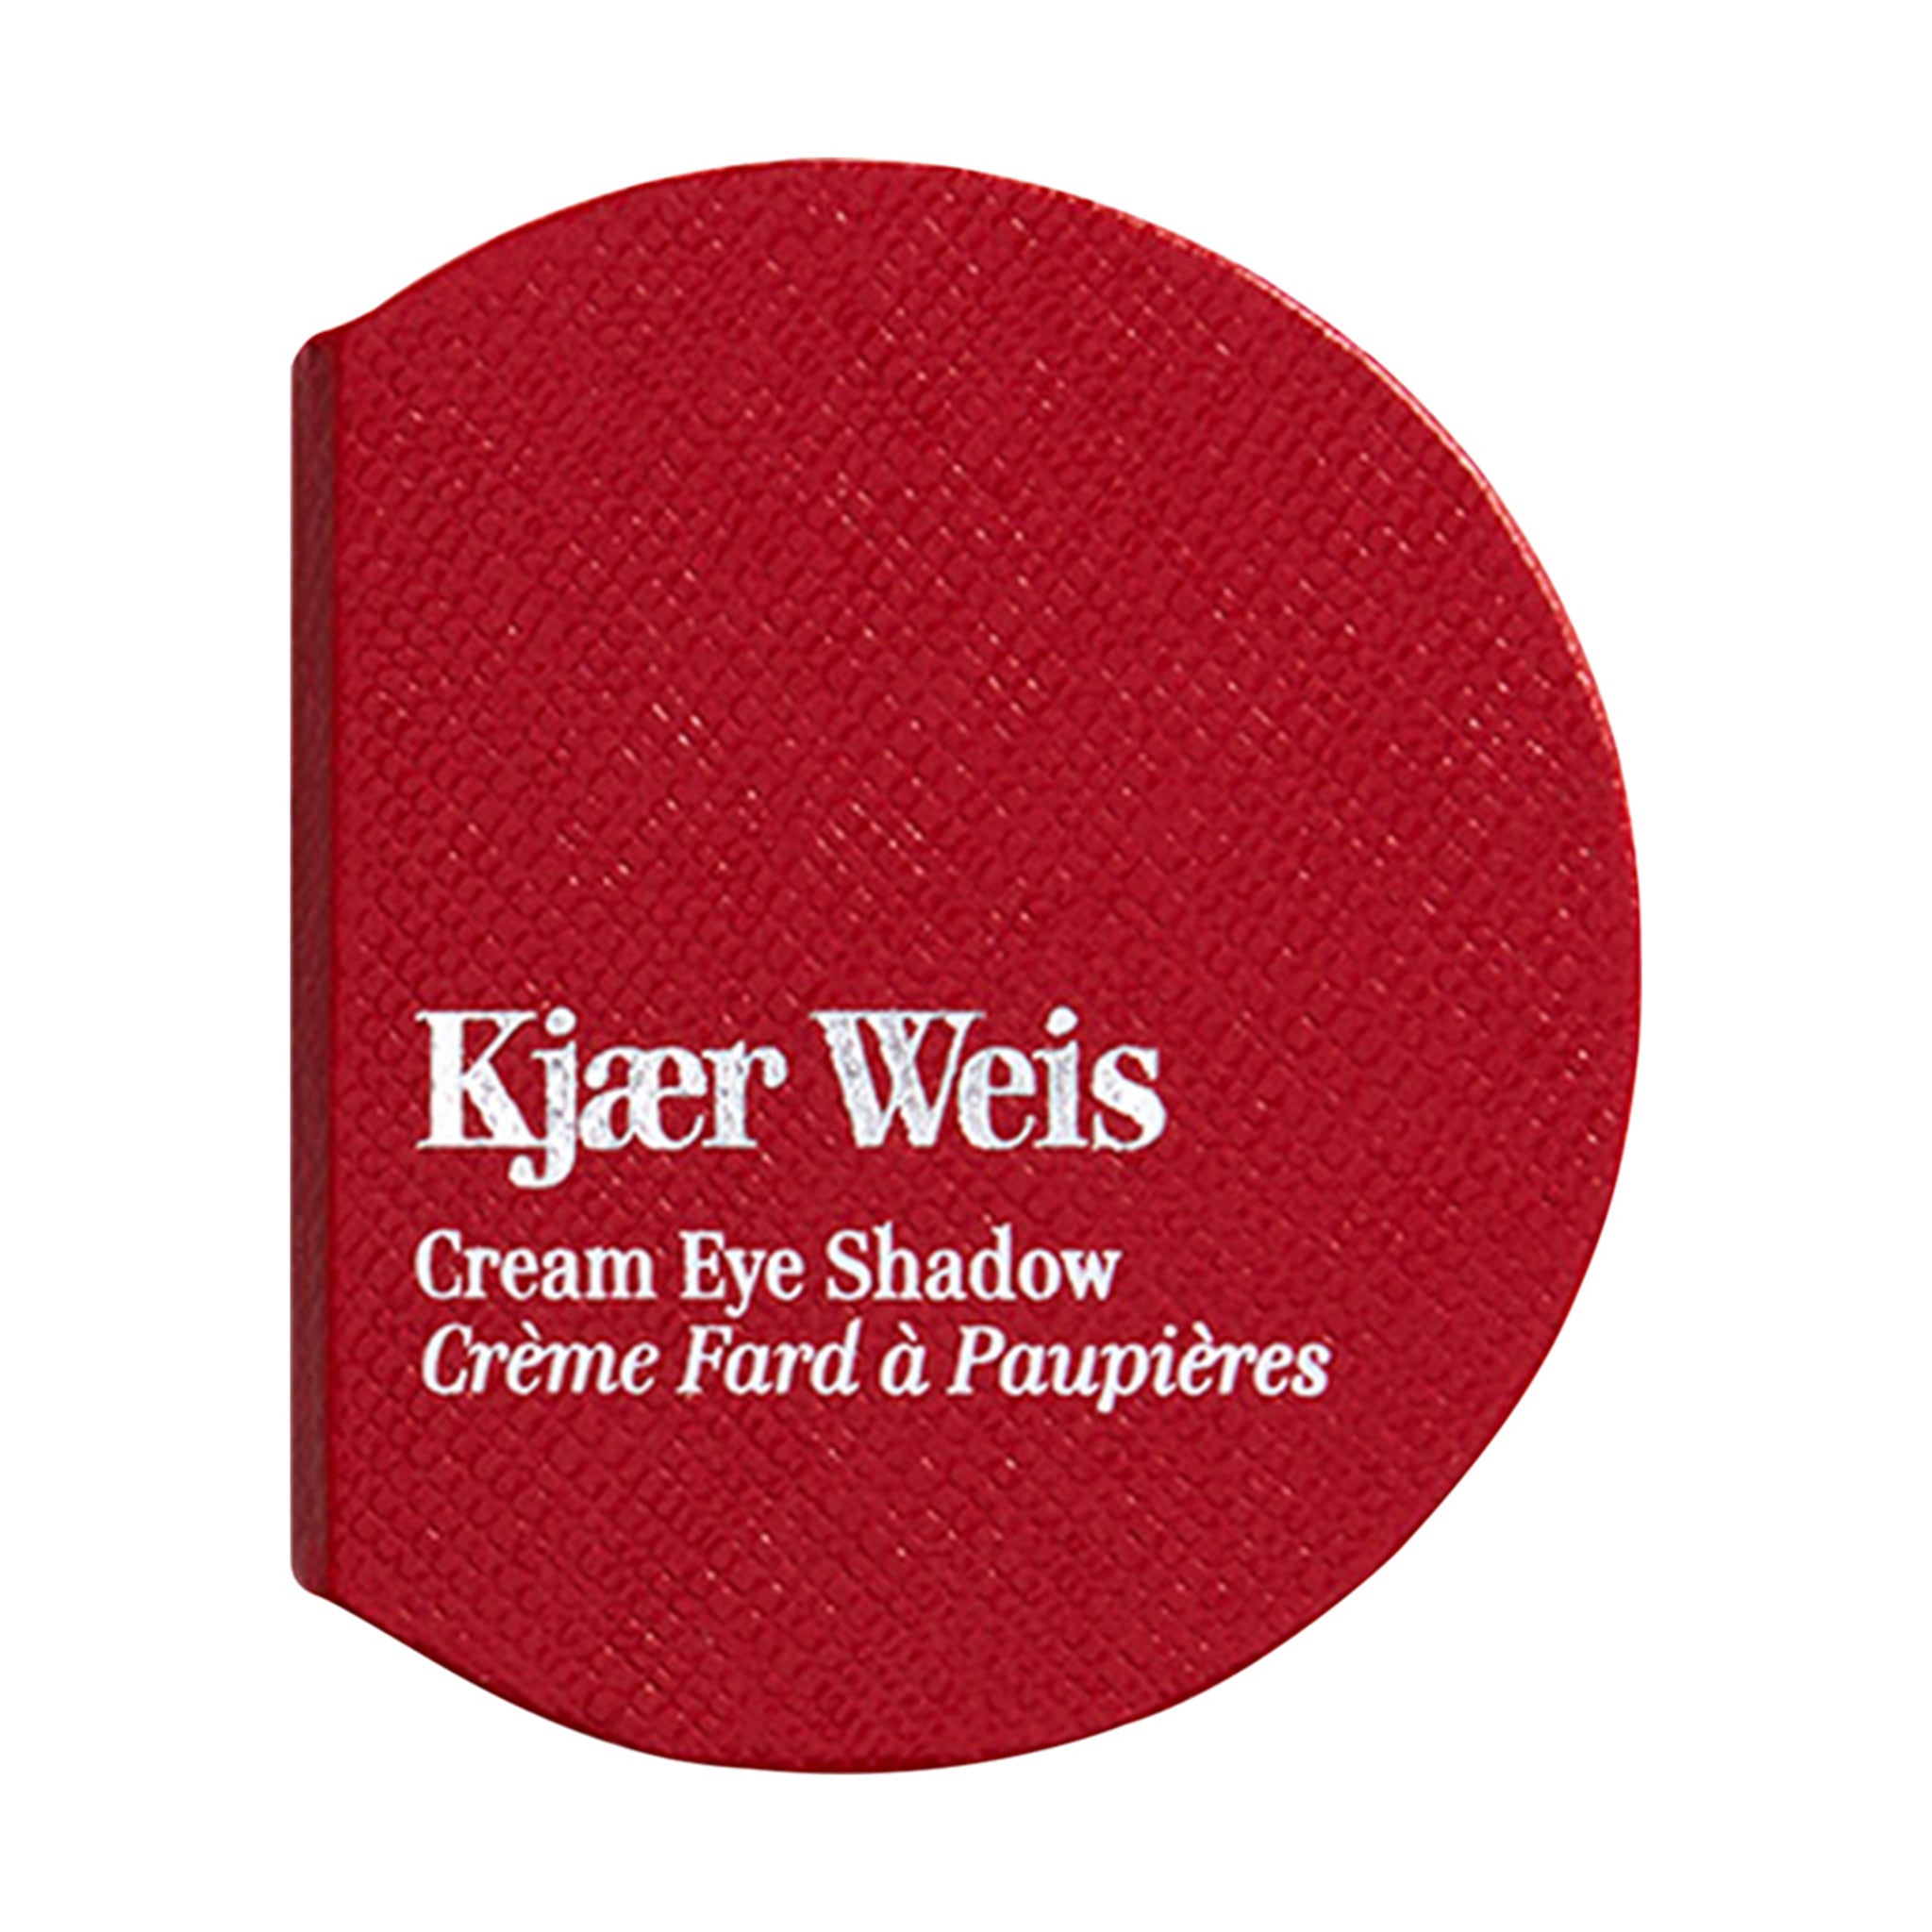 Kjaer Weis Red Edition Cream Eye Shadow Compact main image.